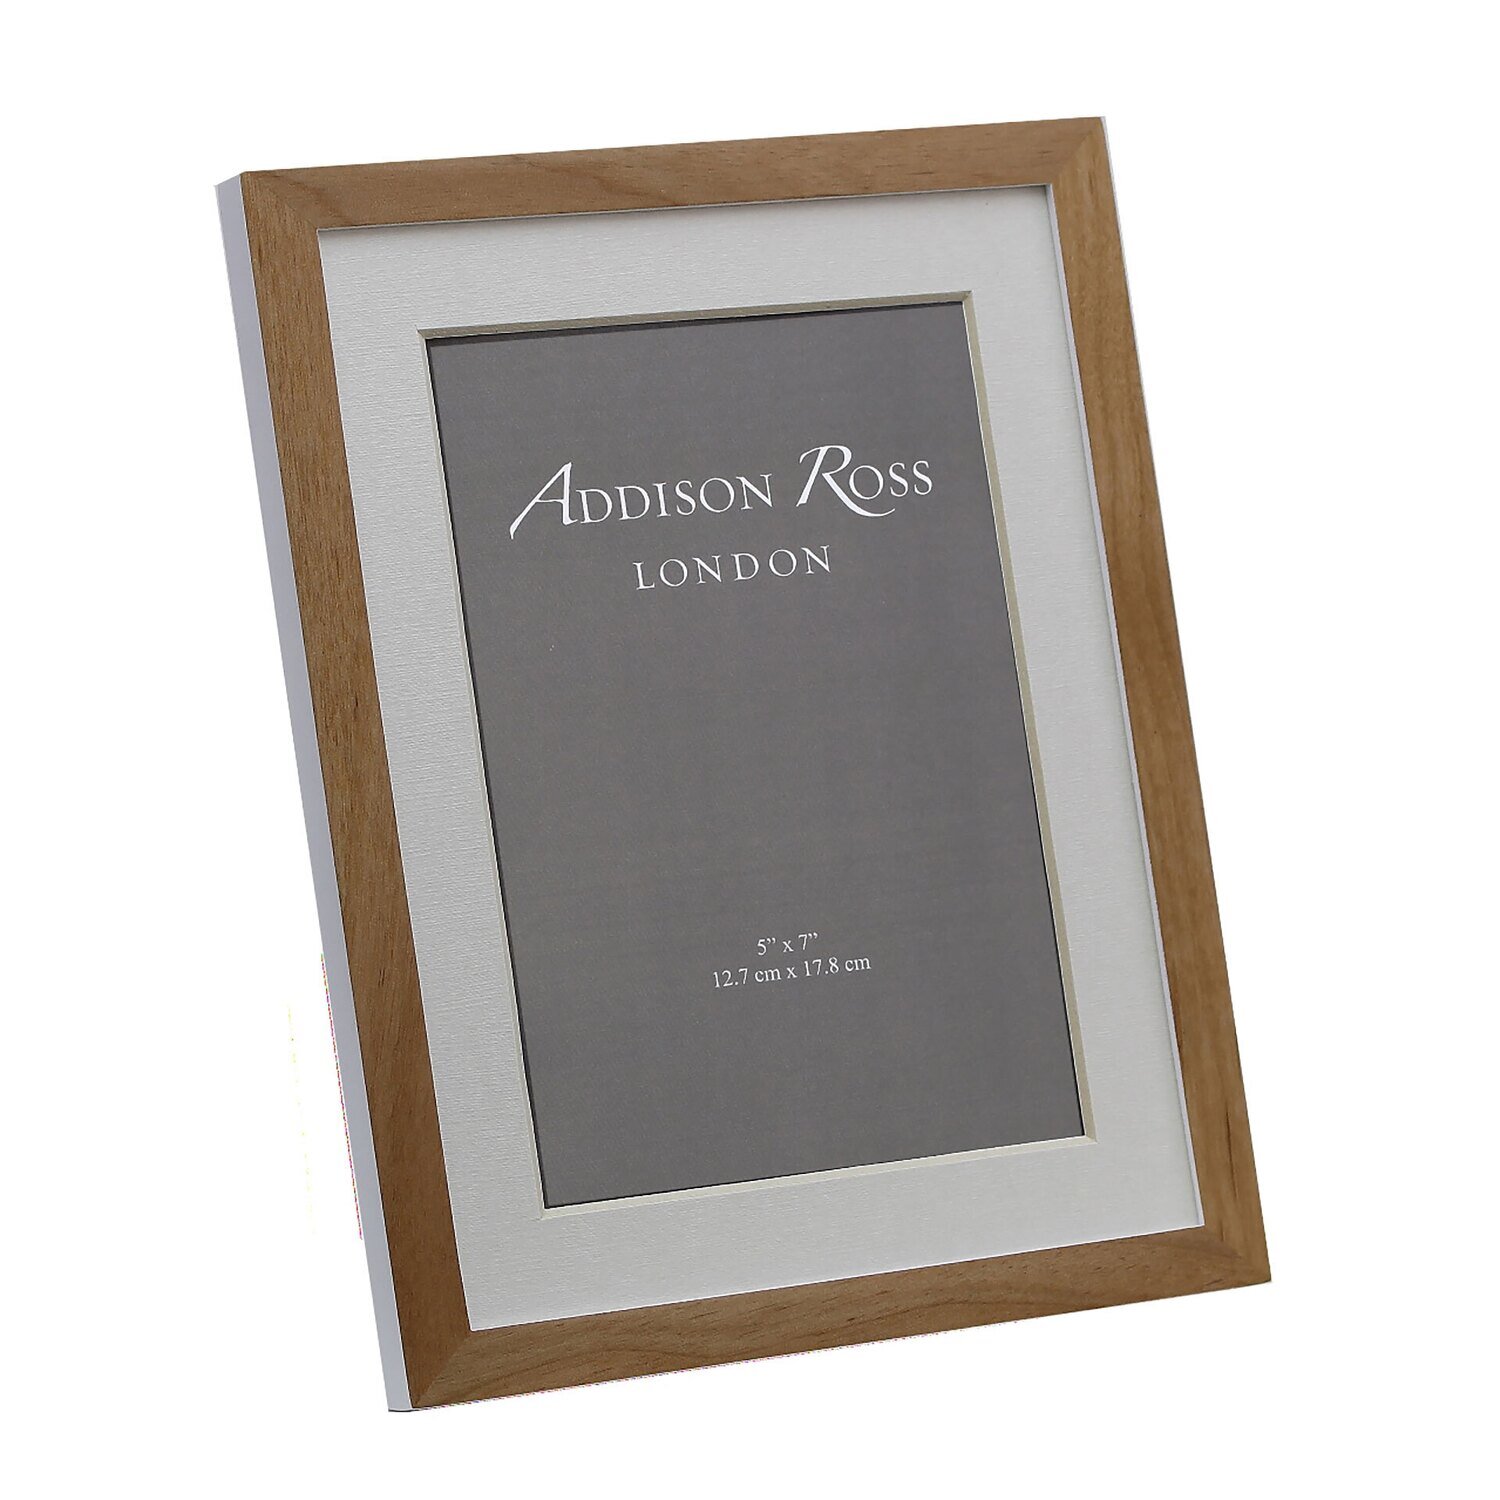 Addison Ross White Alder Wood Photo Frame 8 x 10 Inch Wood FR5295